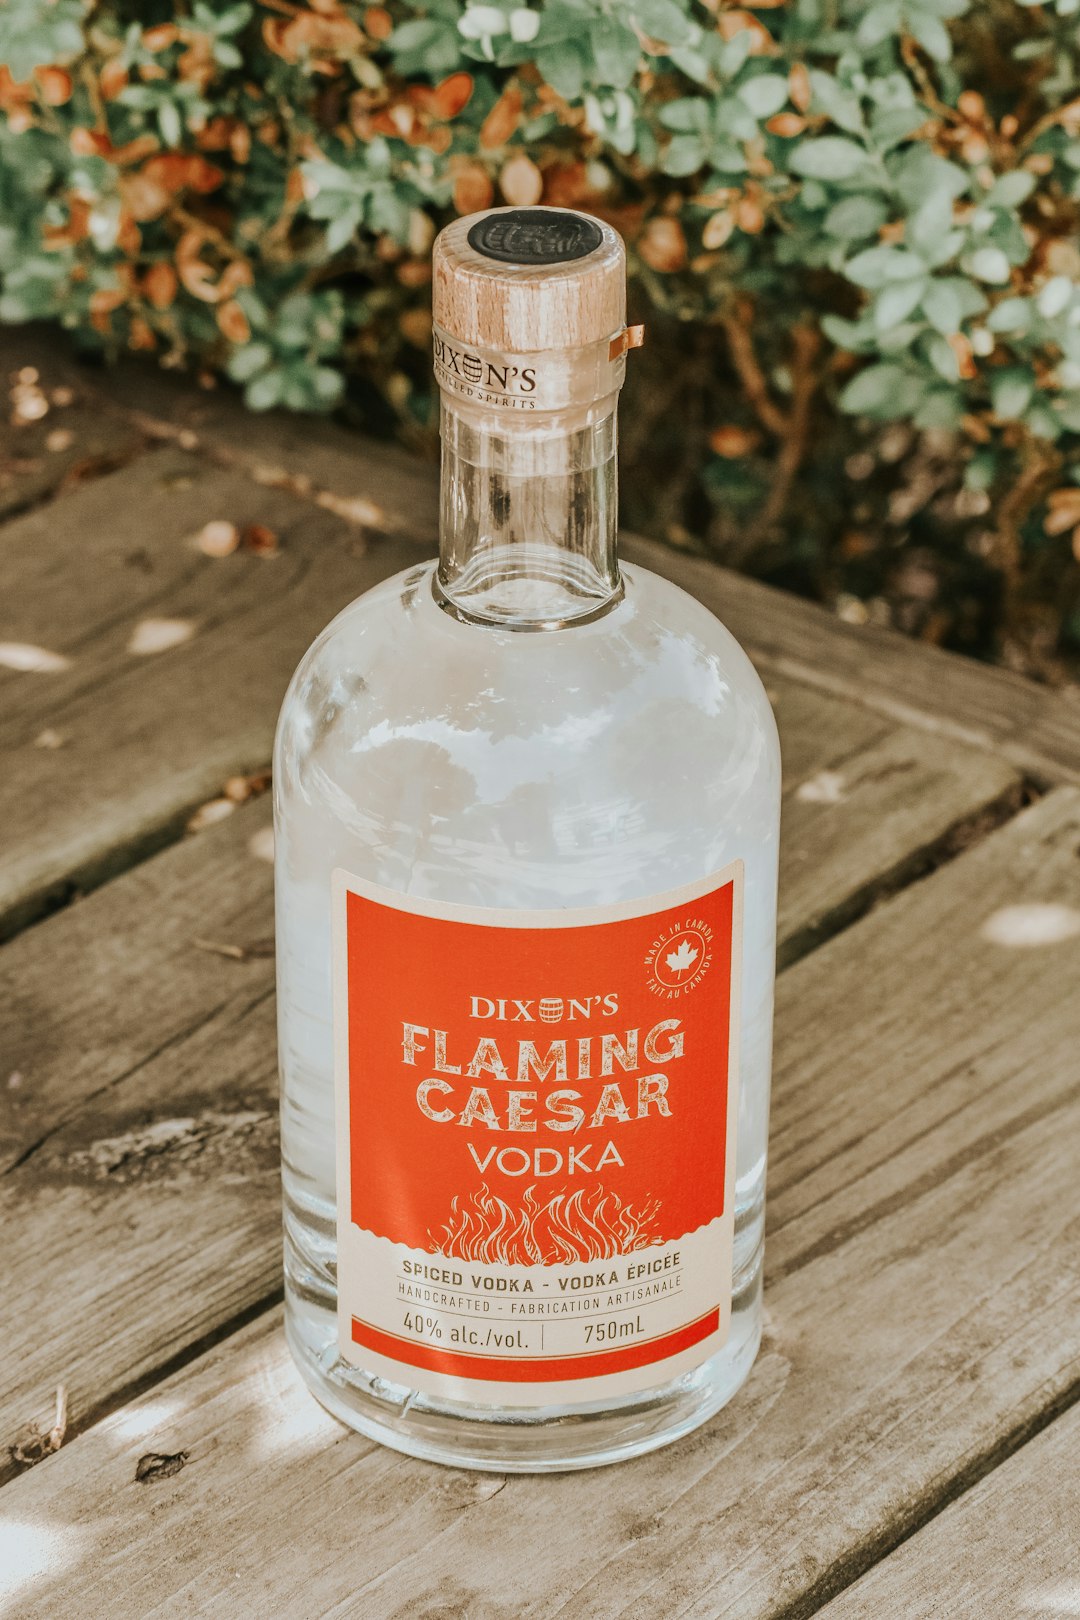 Dixens Flaming Caesar Vodka bottle